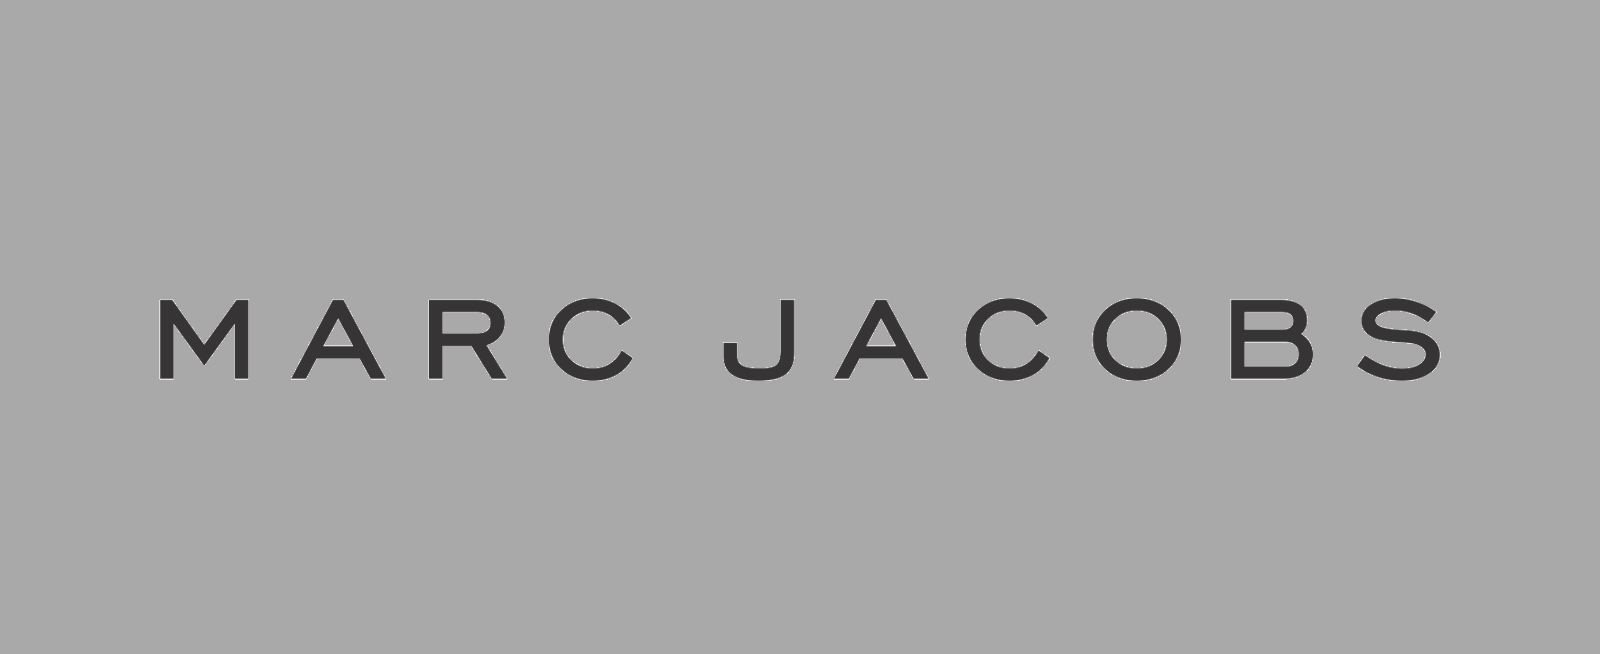 Marc Jacobs Logo - CastMeMarc on Instagram Spots Fresh Faces for Marc Jacobs' Fall